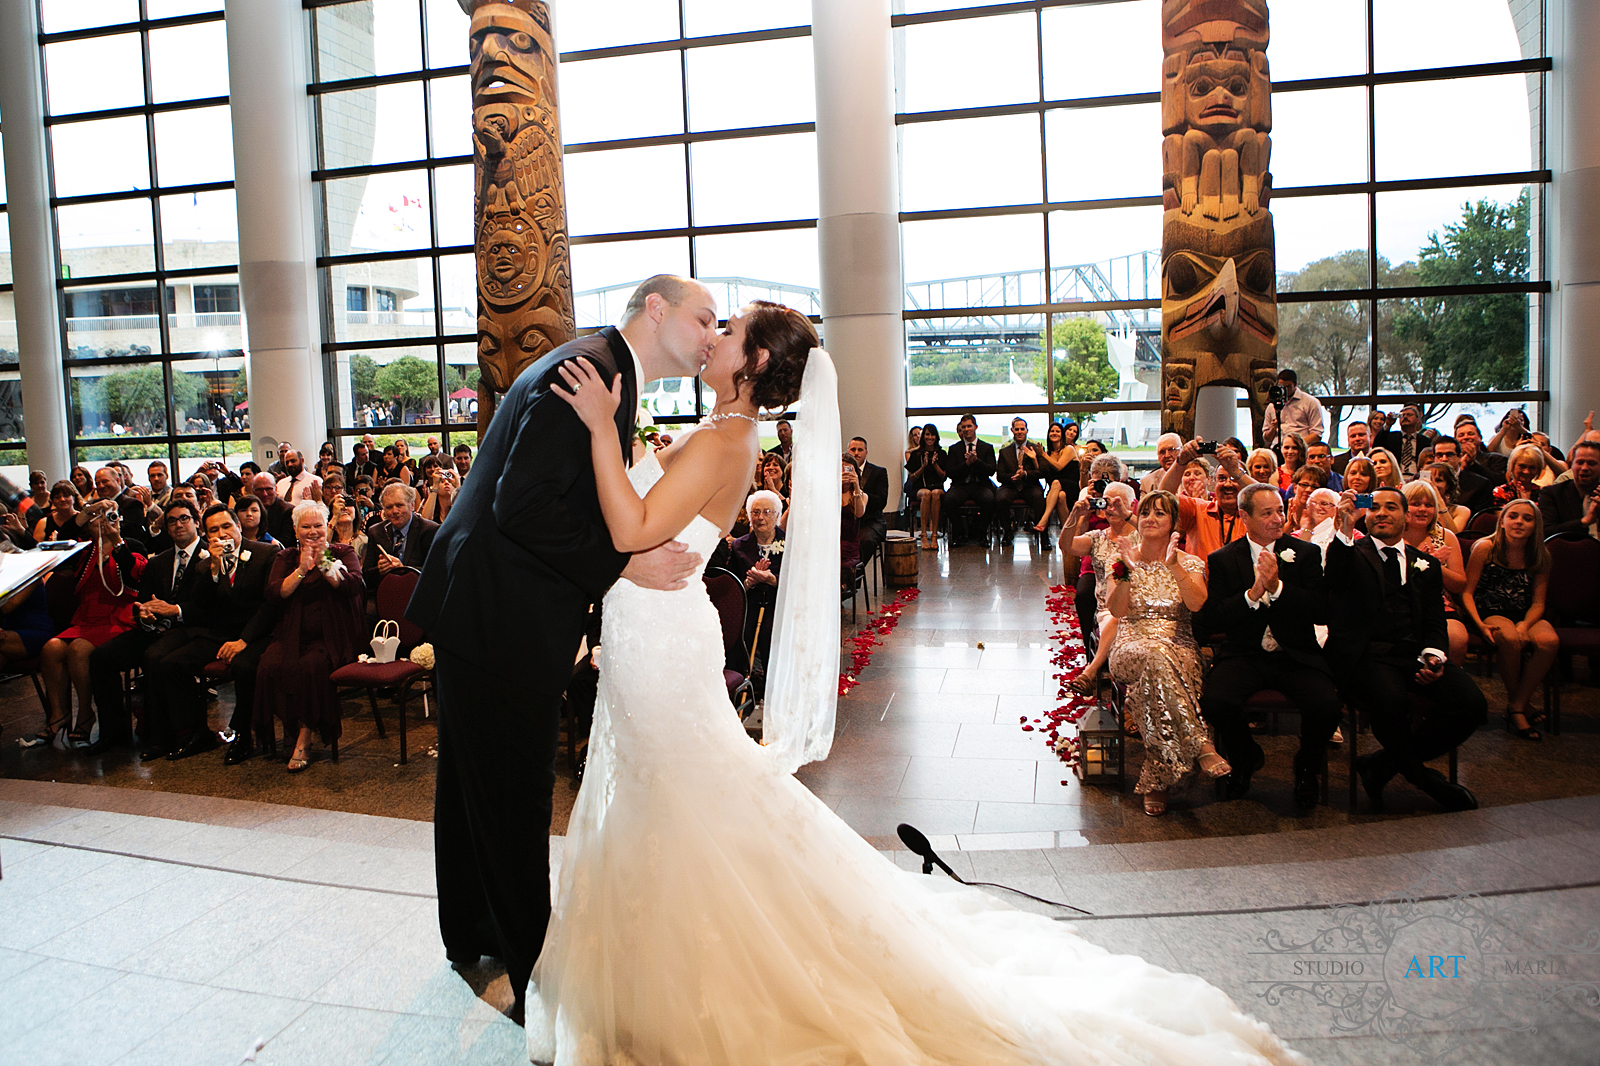 https://www.ottawaweddingmagazine.com/wp-content/uploads/2013/11/wedding-pictures-835.jpg